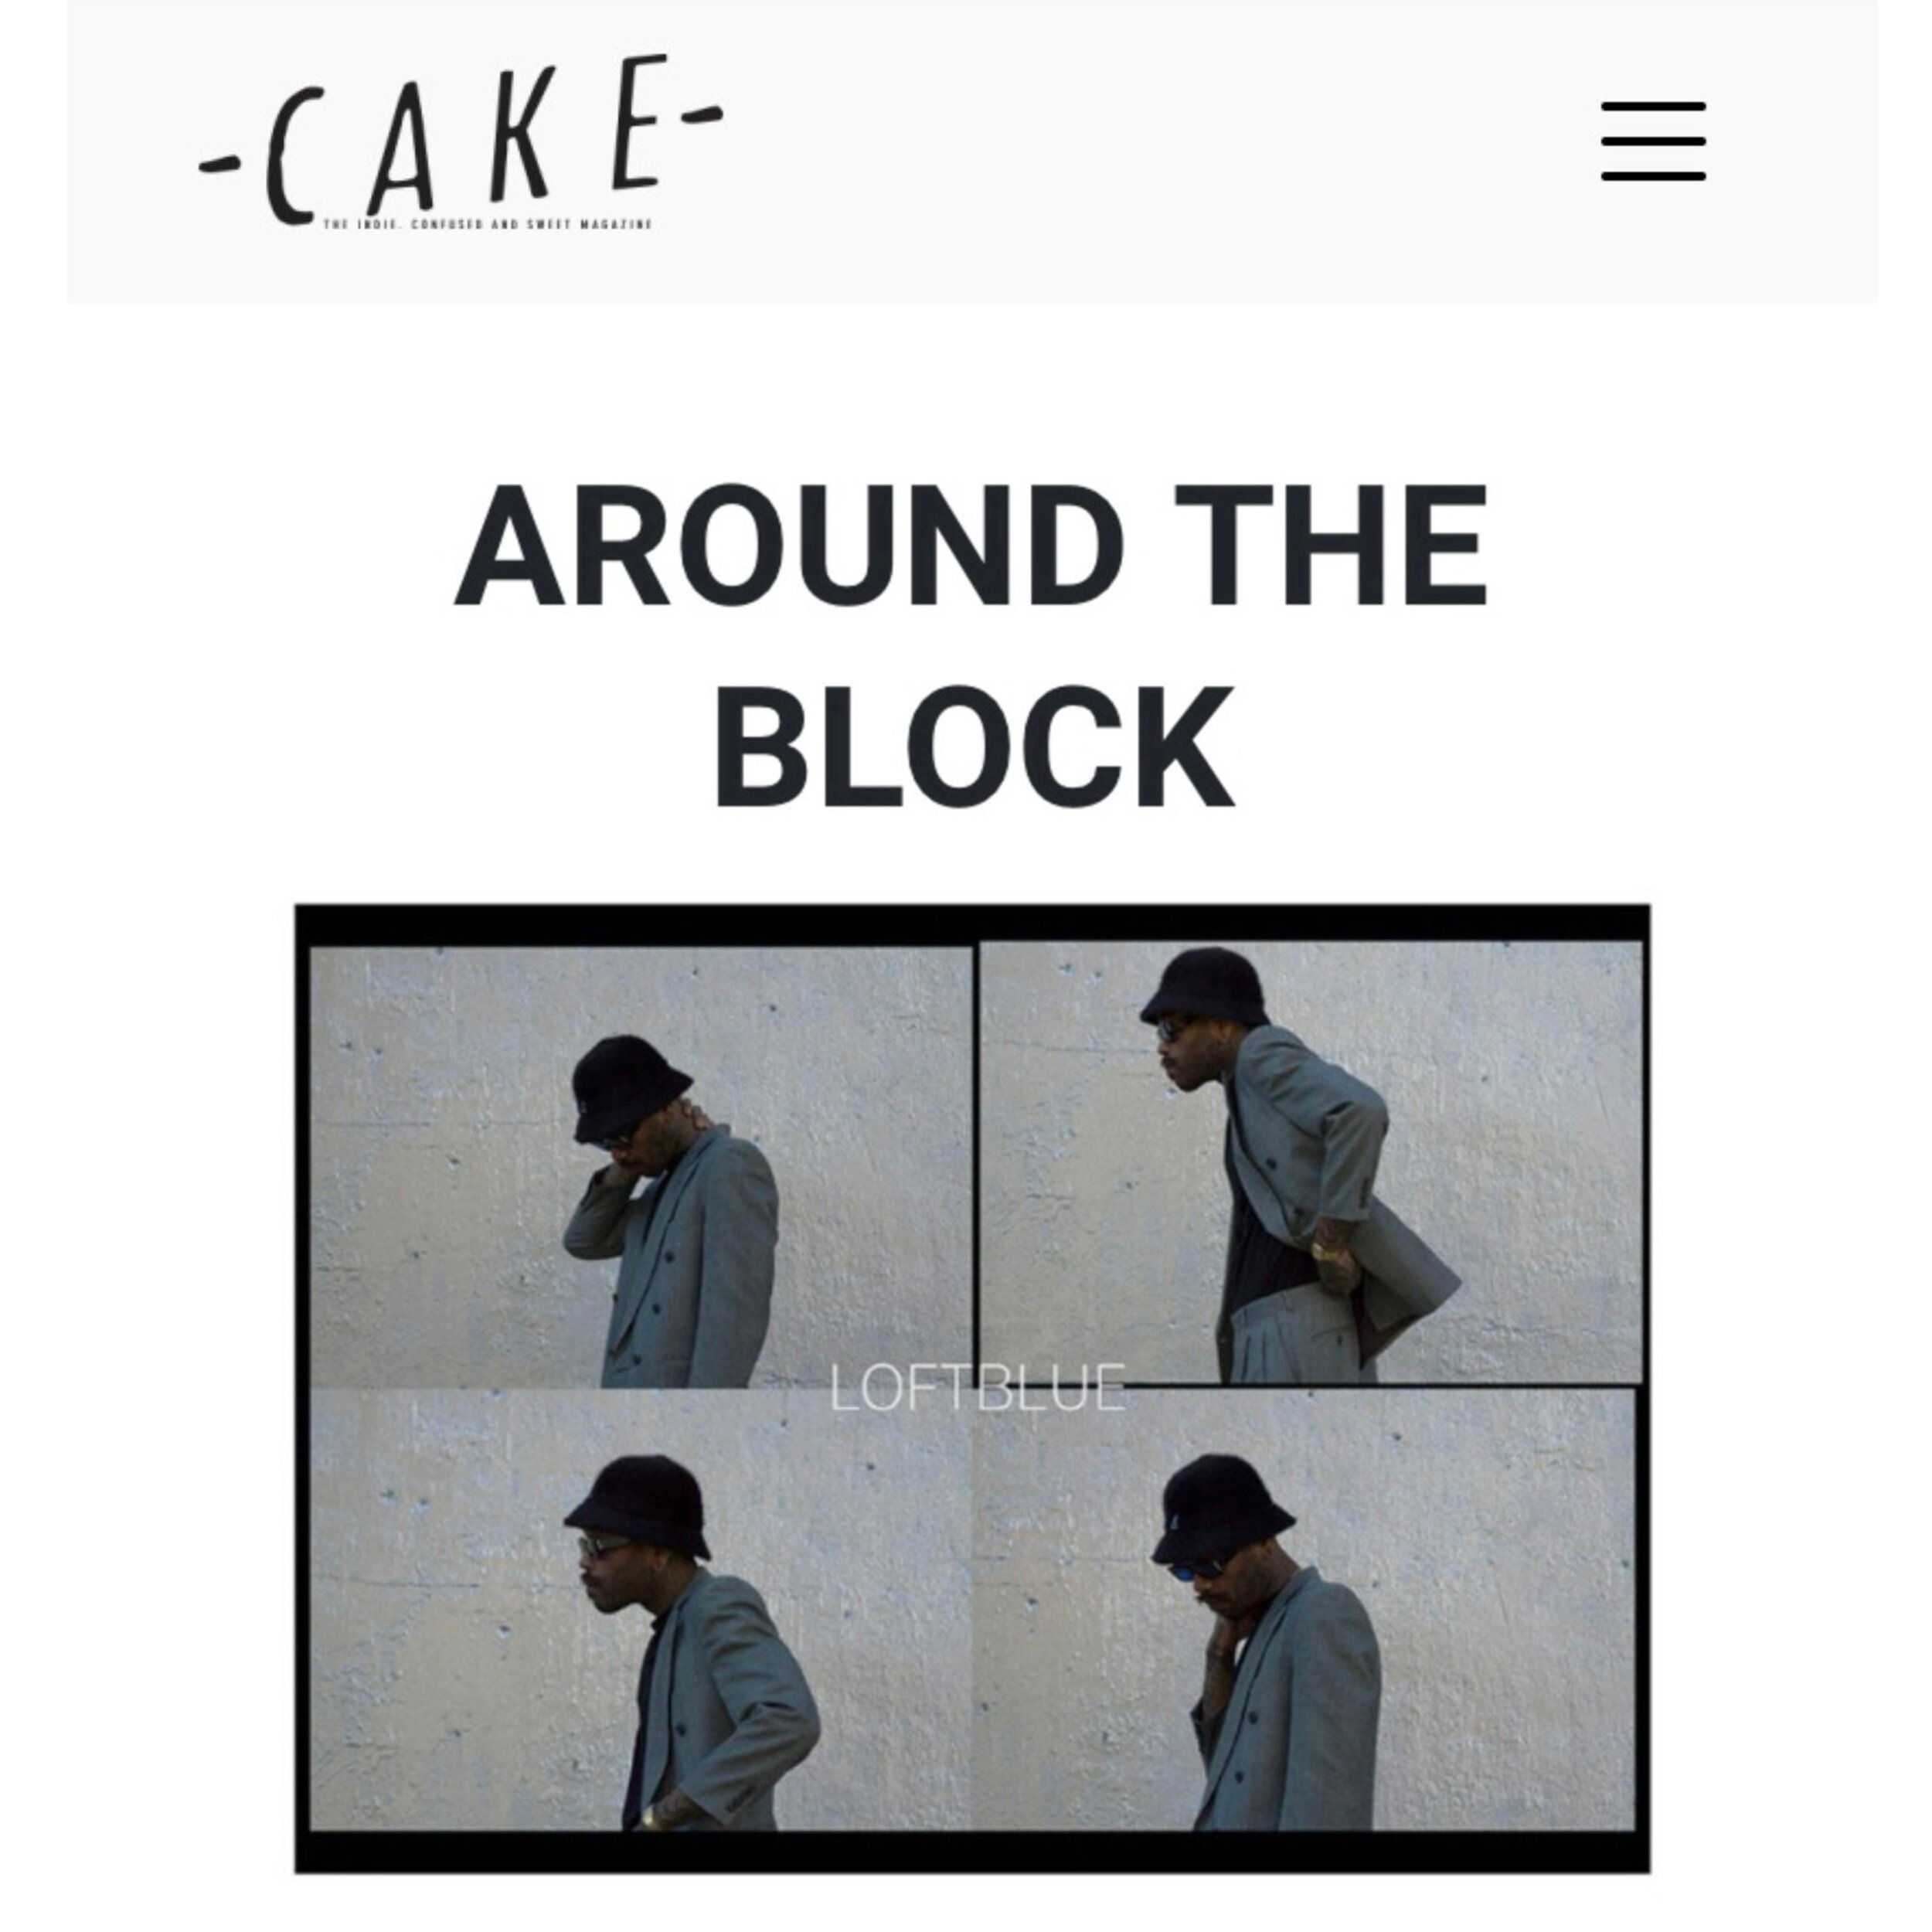 Around the Block with LofBlue for Cake Magazine 